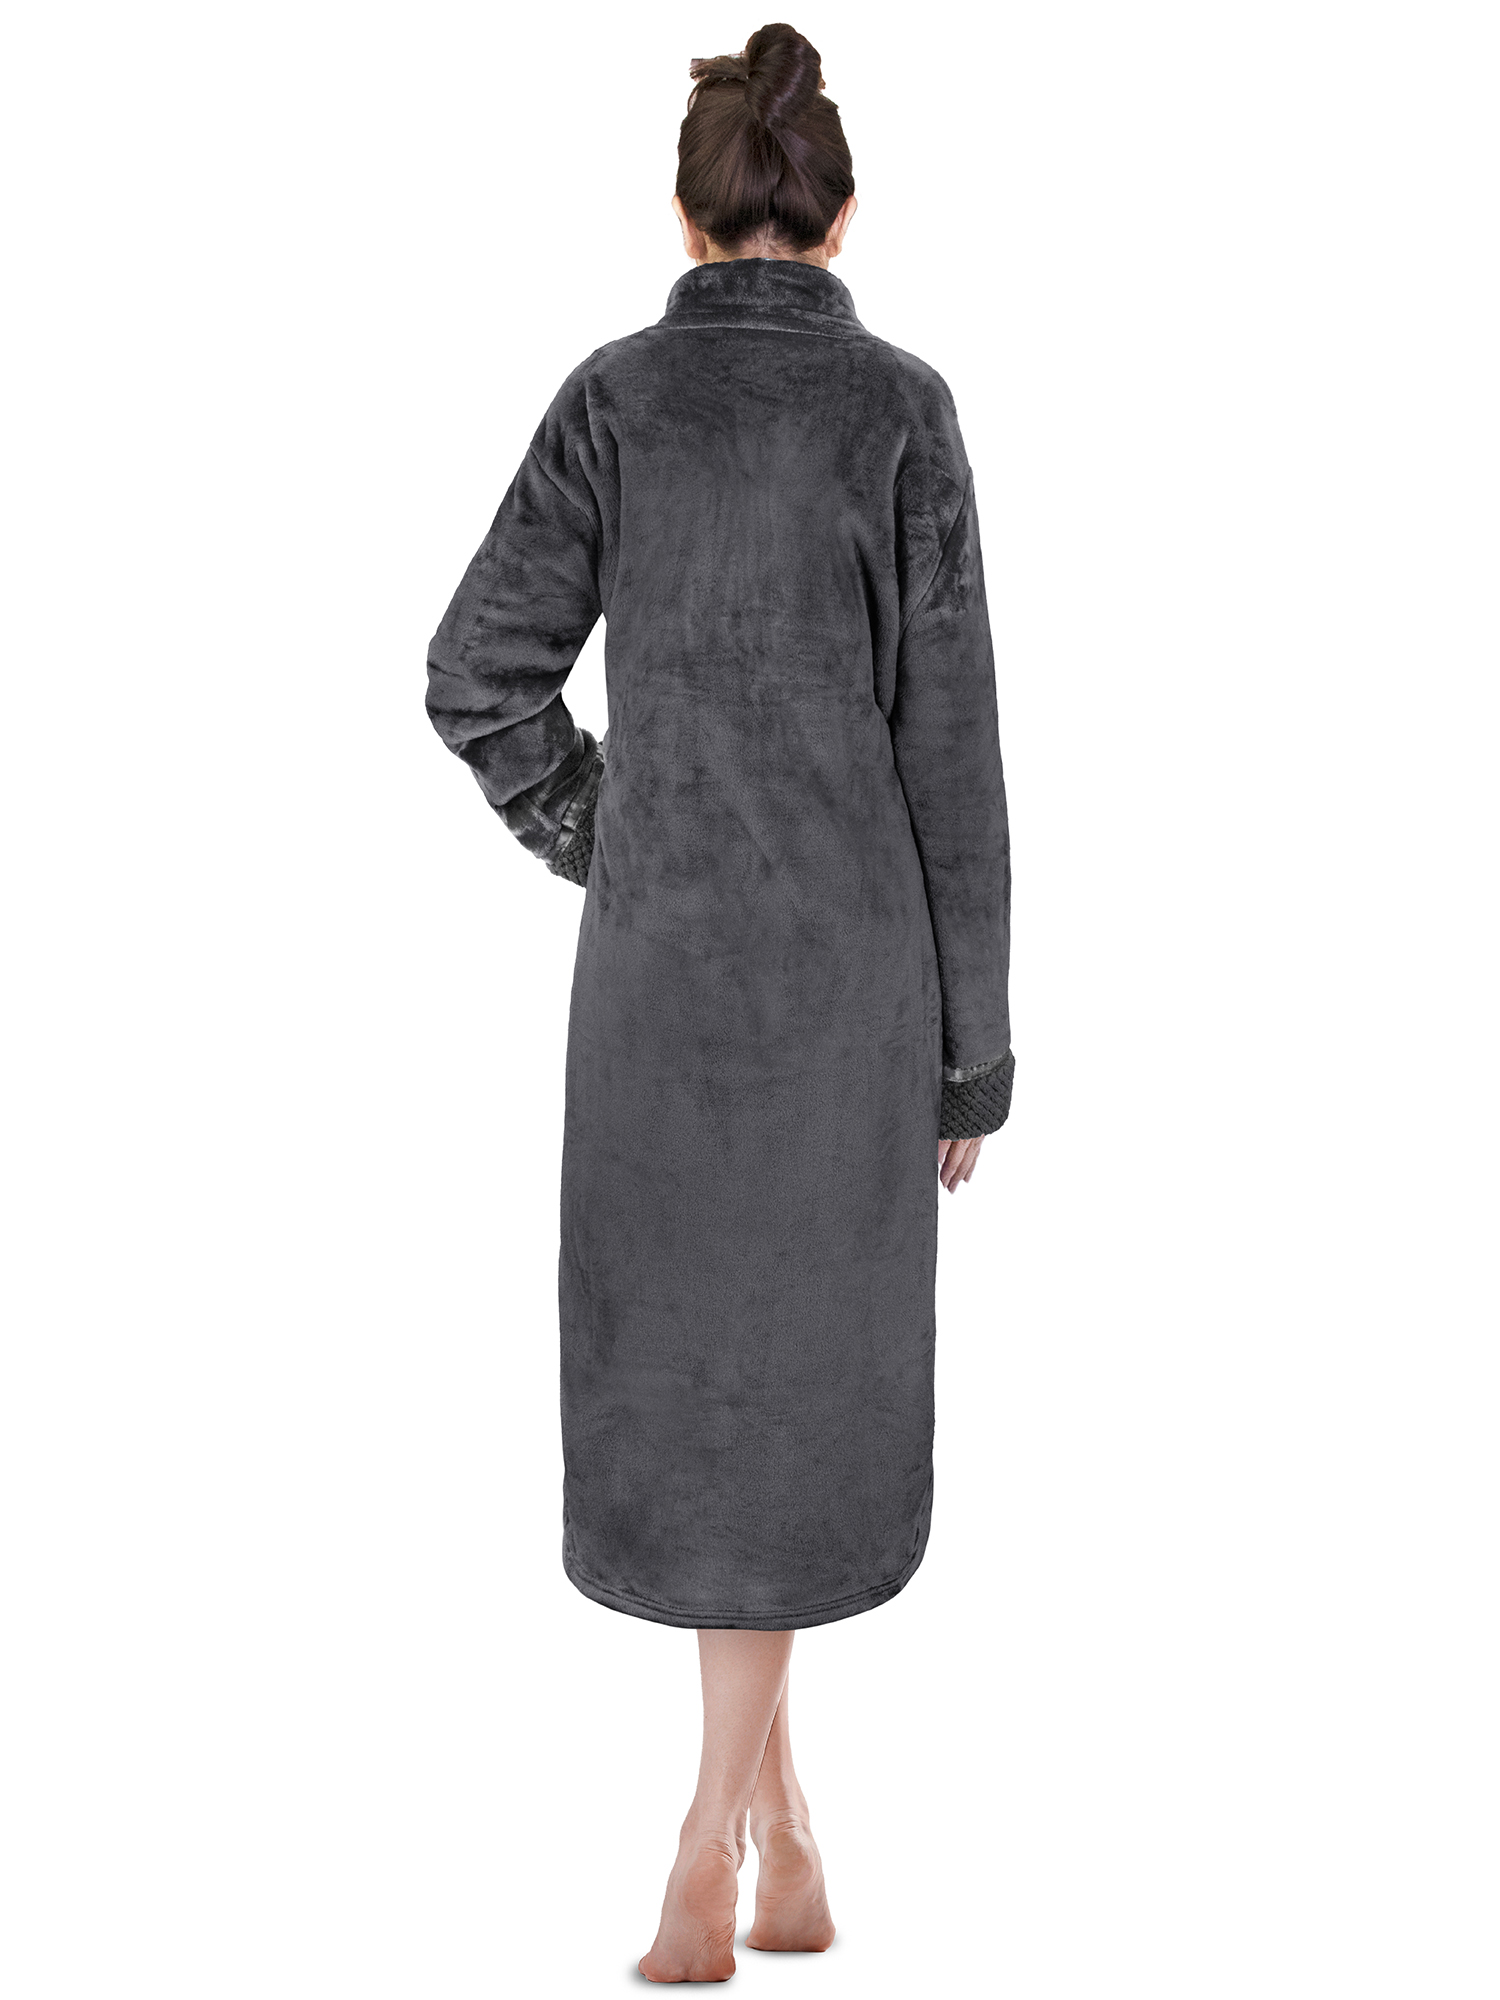 Zip Satin Robe Robe Zipper | eBay Housecoat Length Up Ladies Lounger Women Trim Full